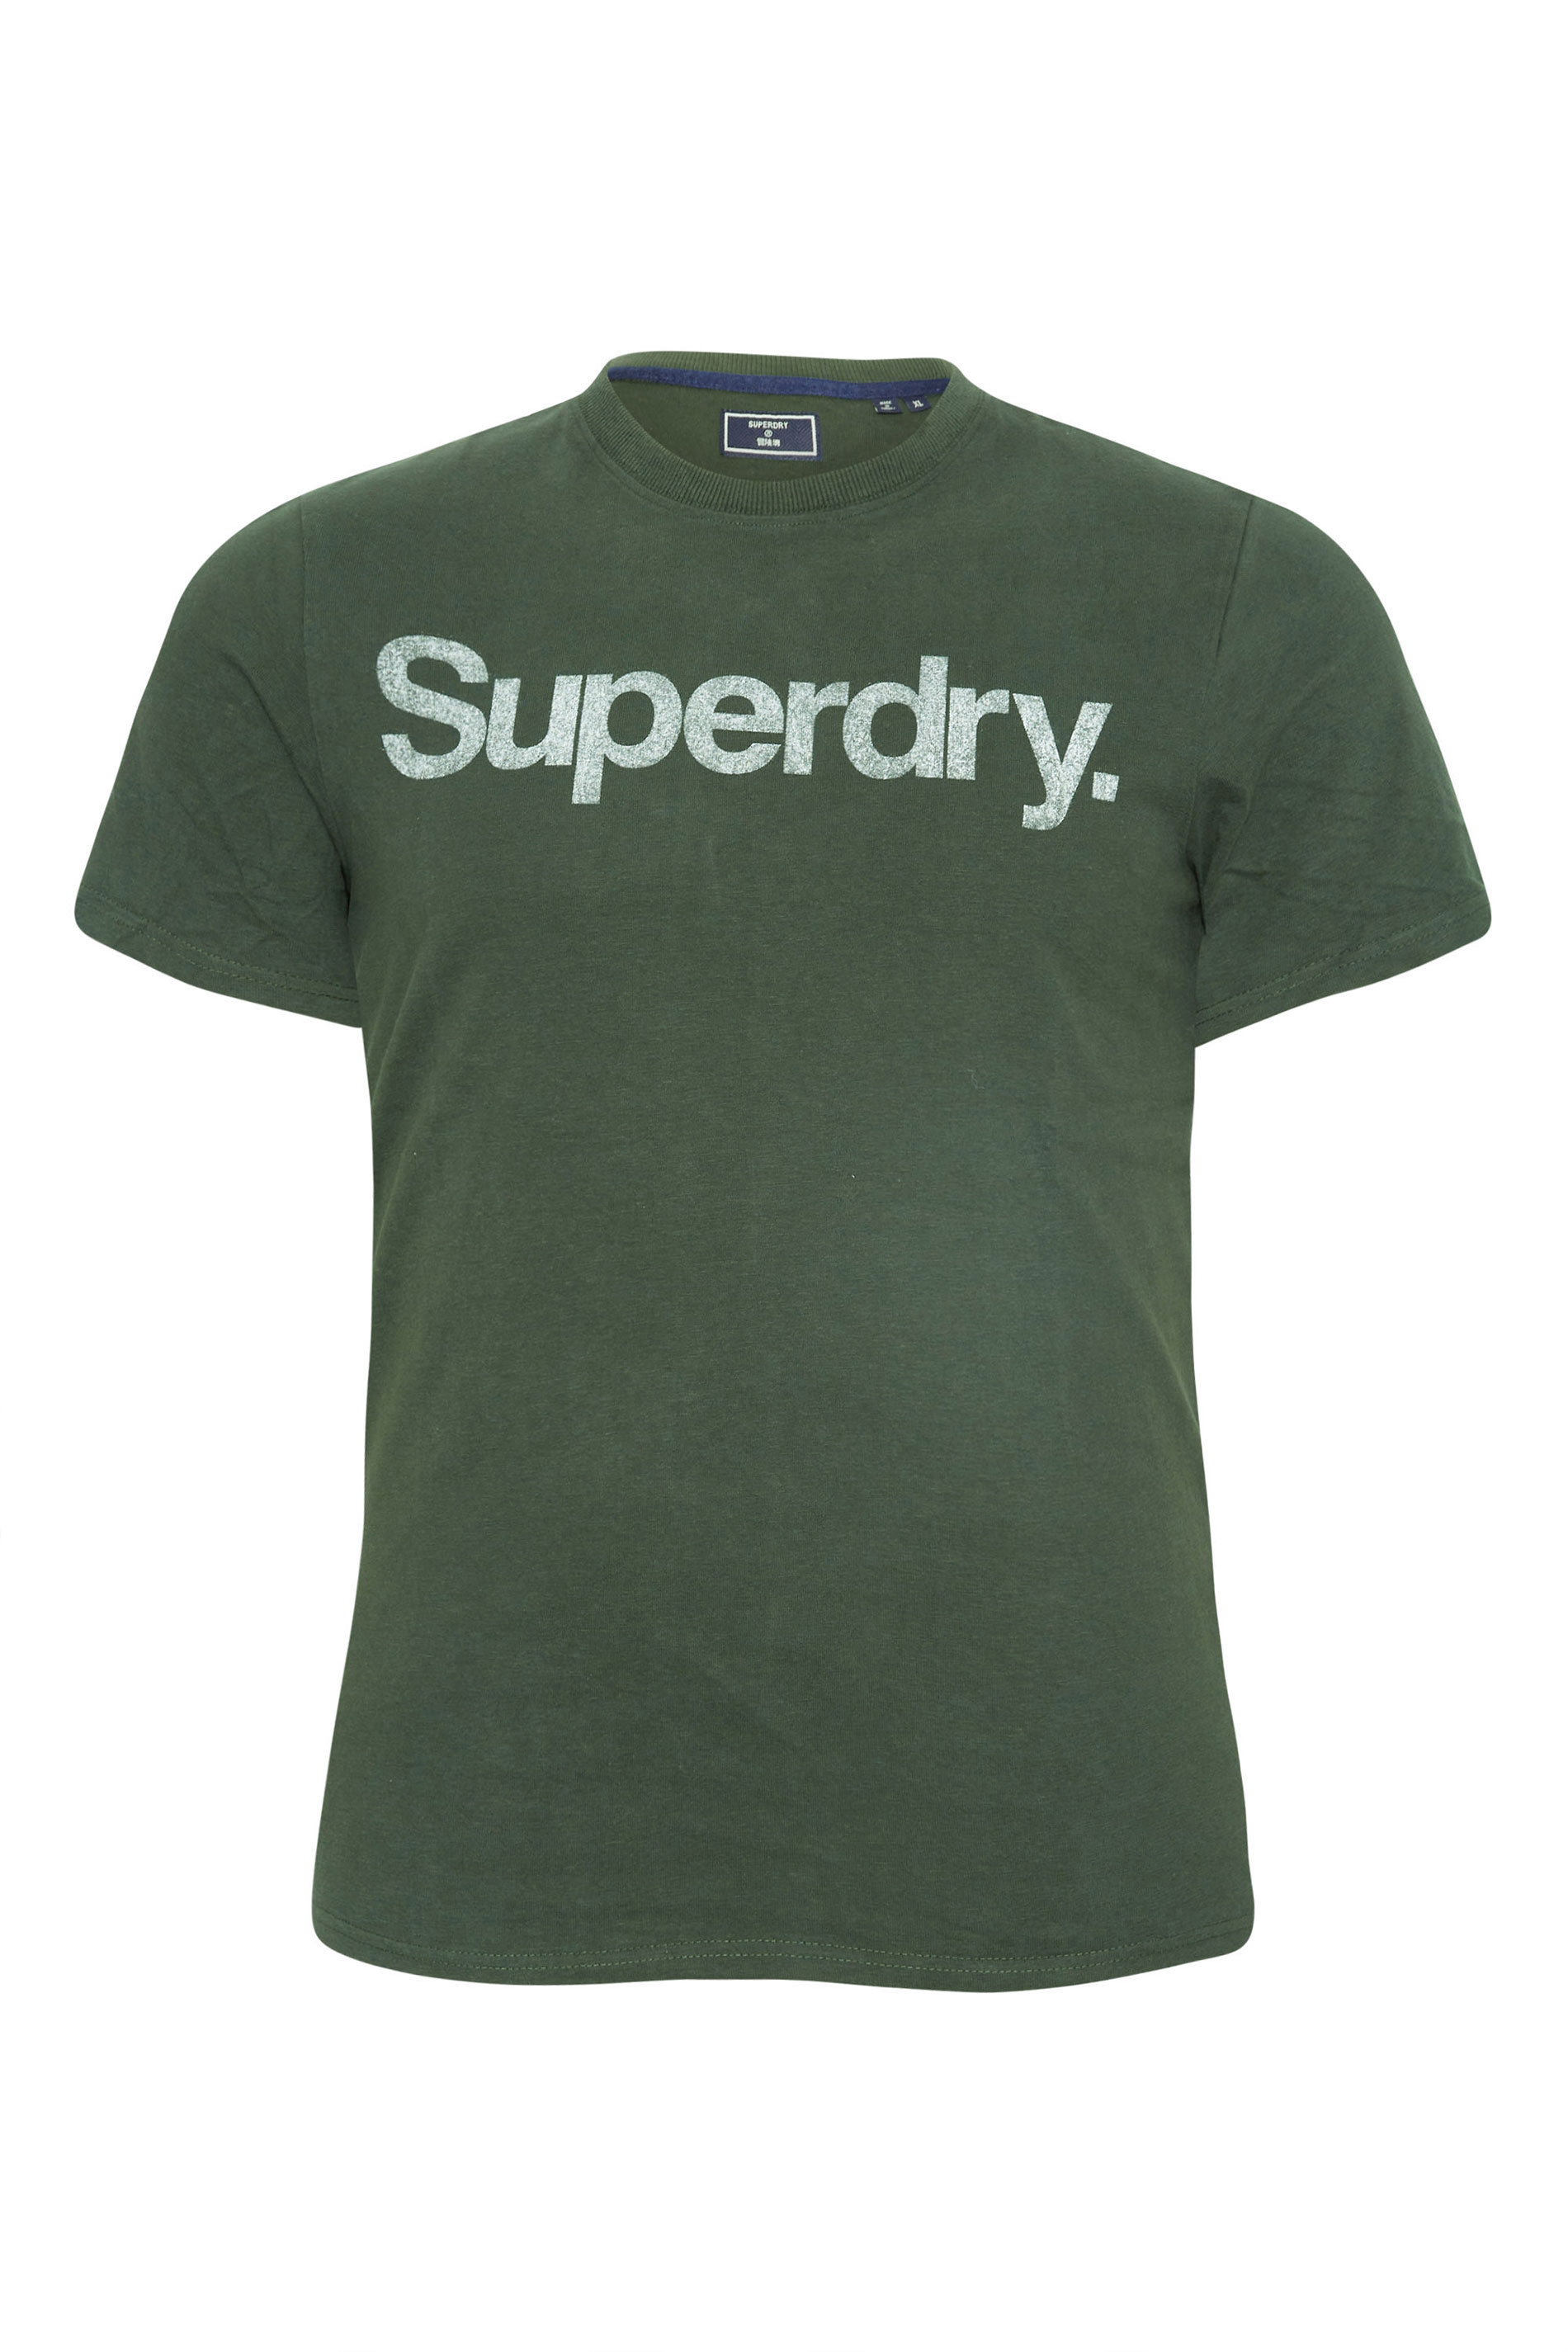 SUPERDRY Khaki Green Vintage Logo T-Shirt | BadRhino 1